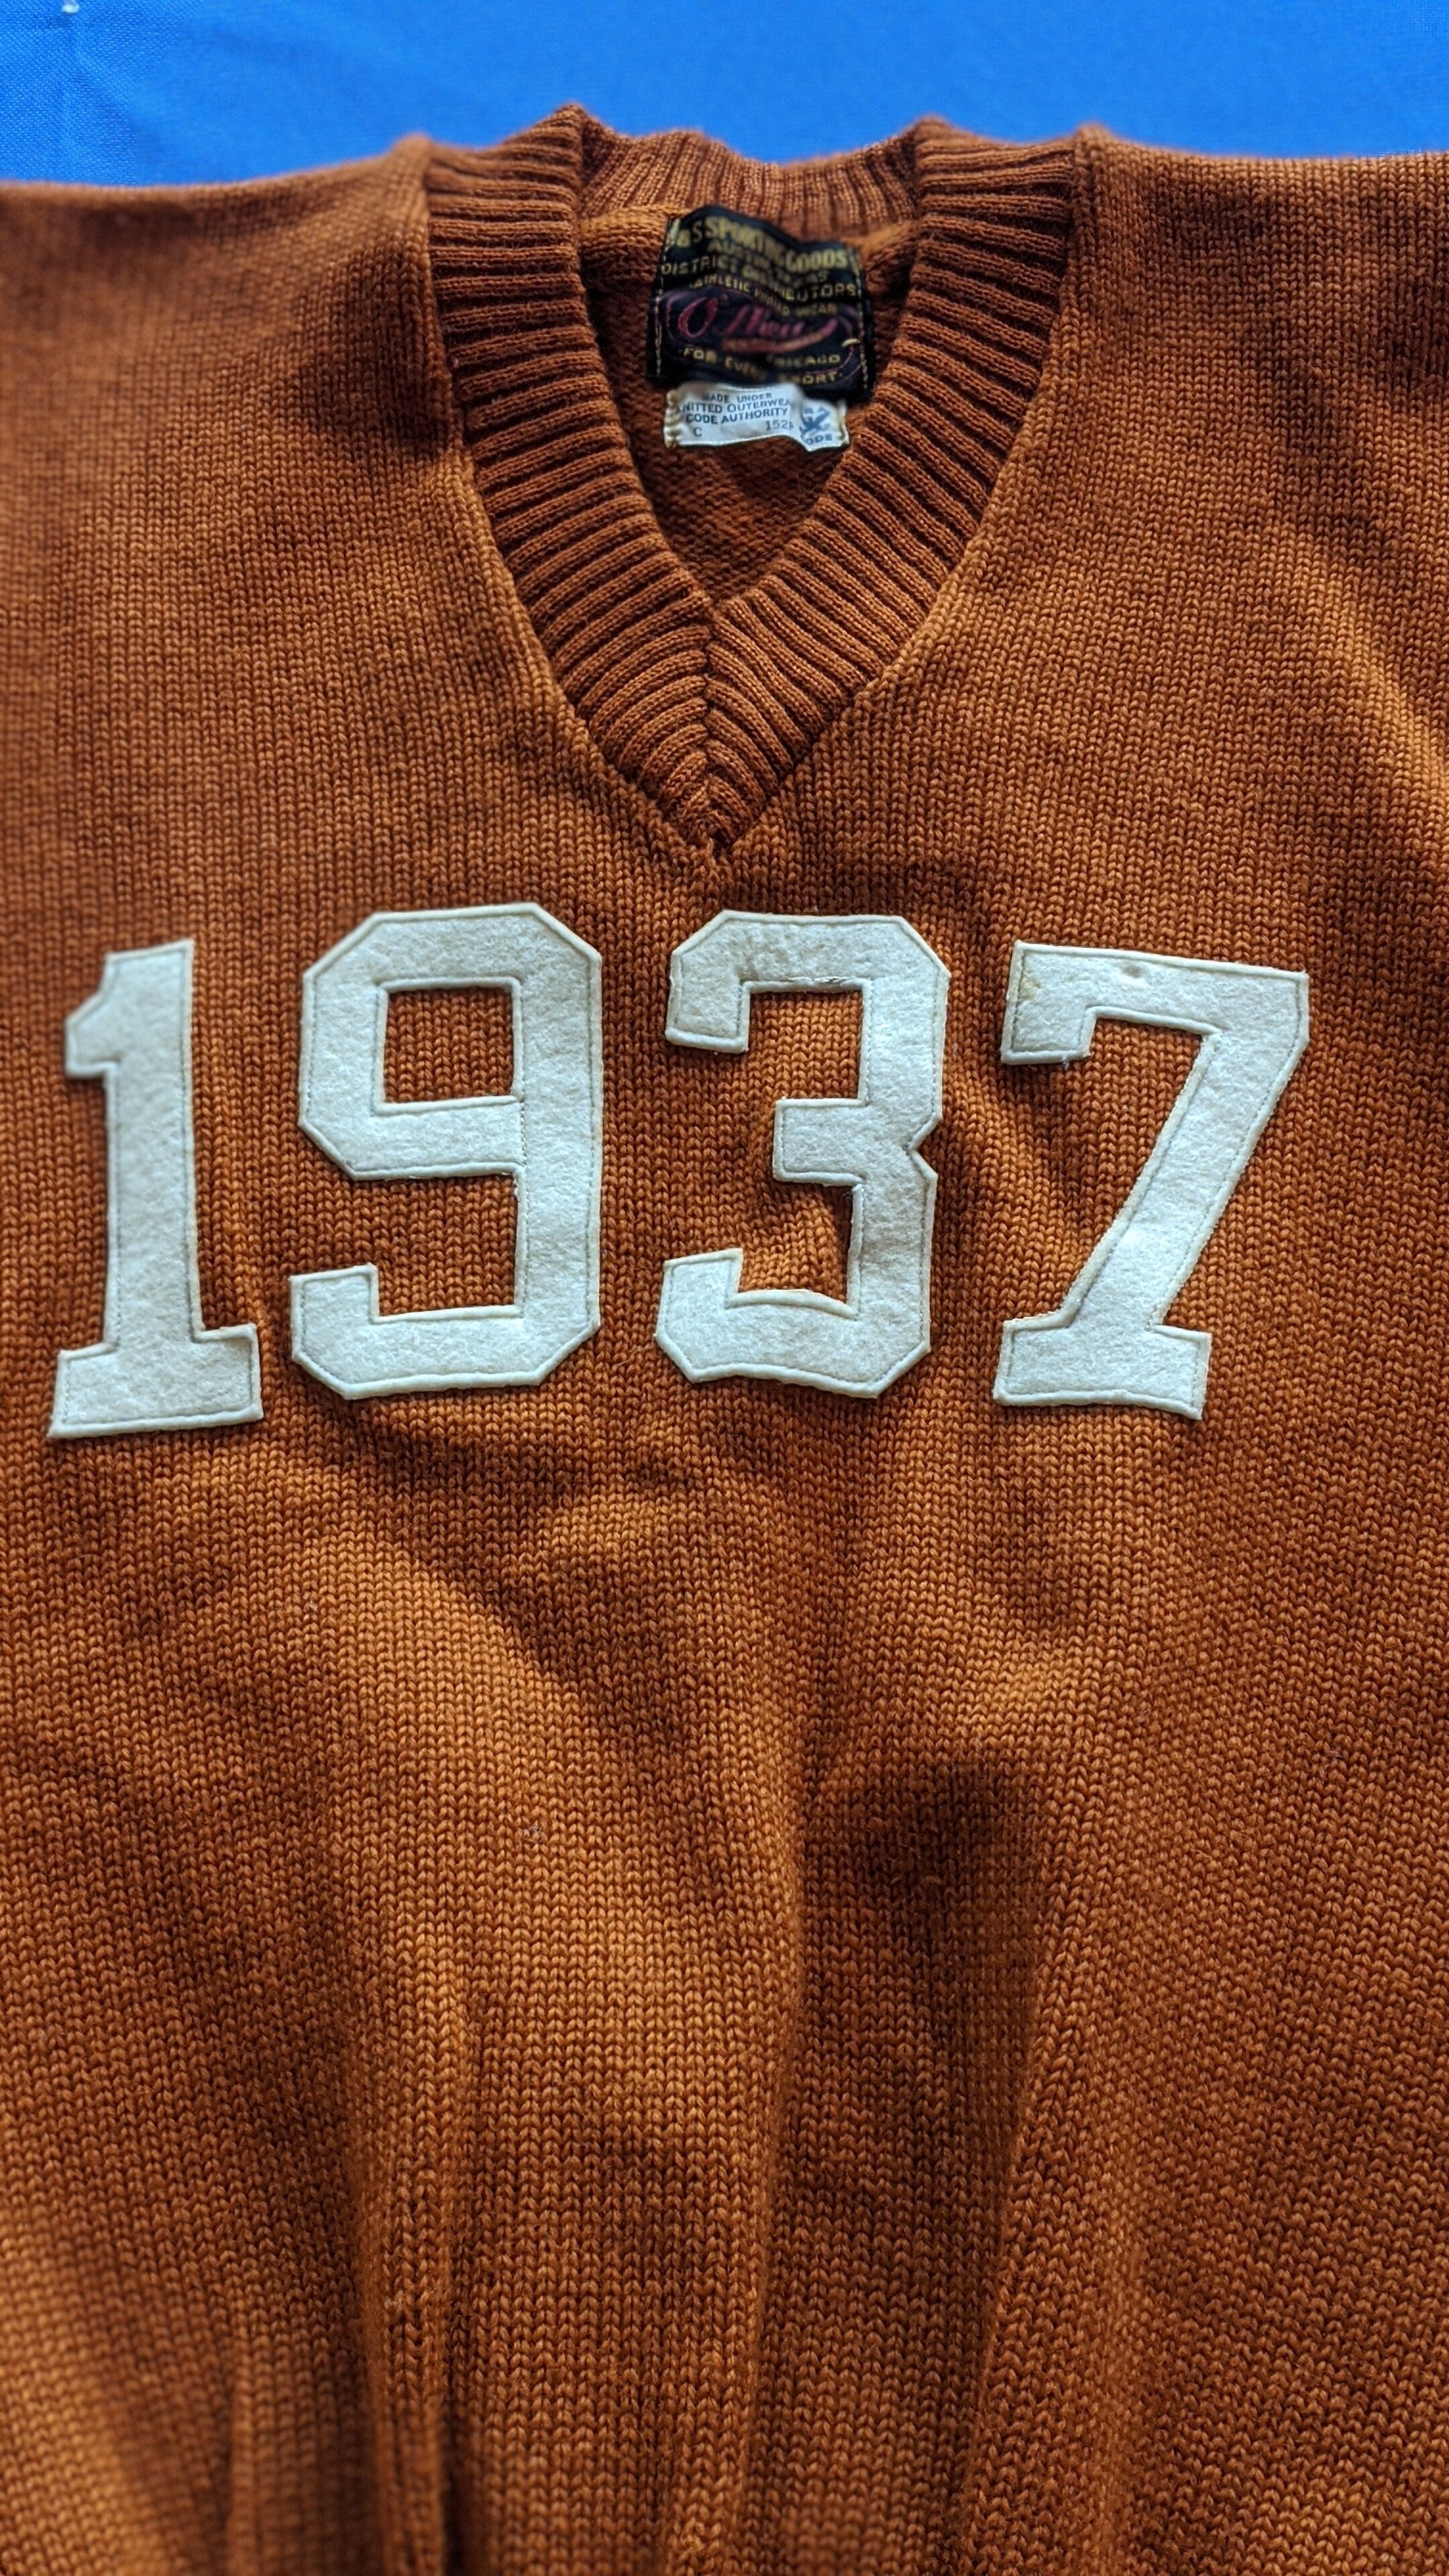 1937 - Texas orange